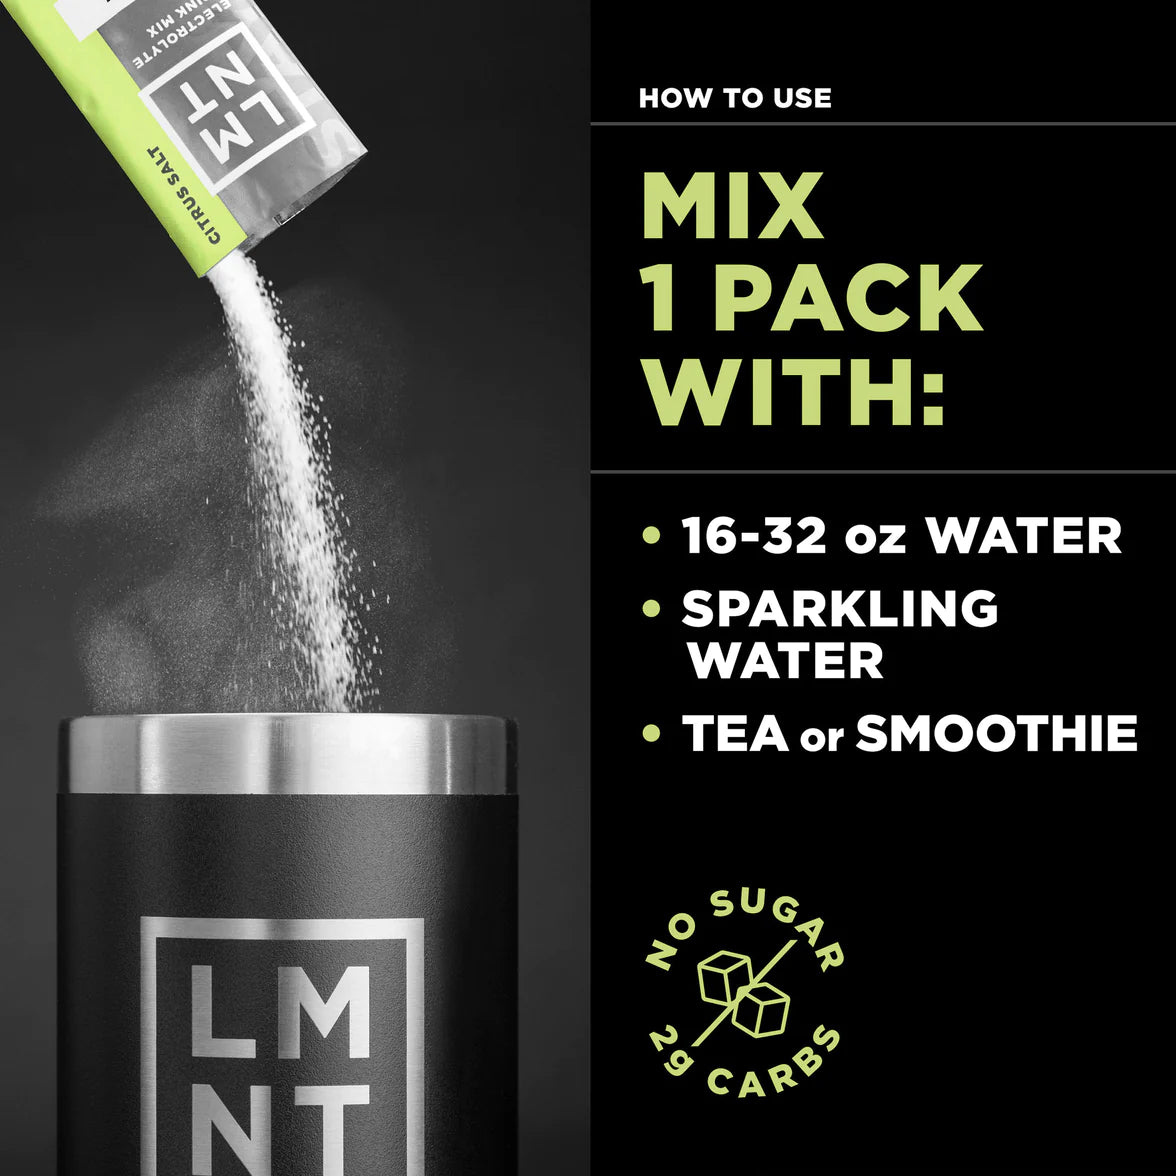 LMNT® Electrolyte Drink Mix - Citrus Salt